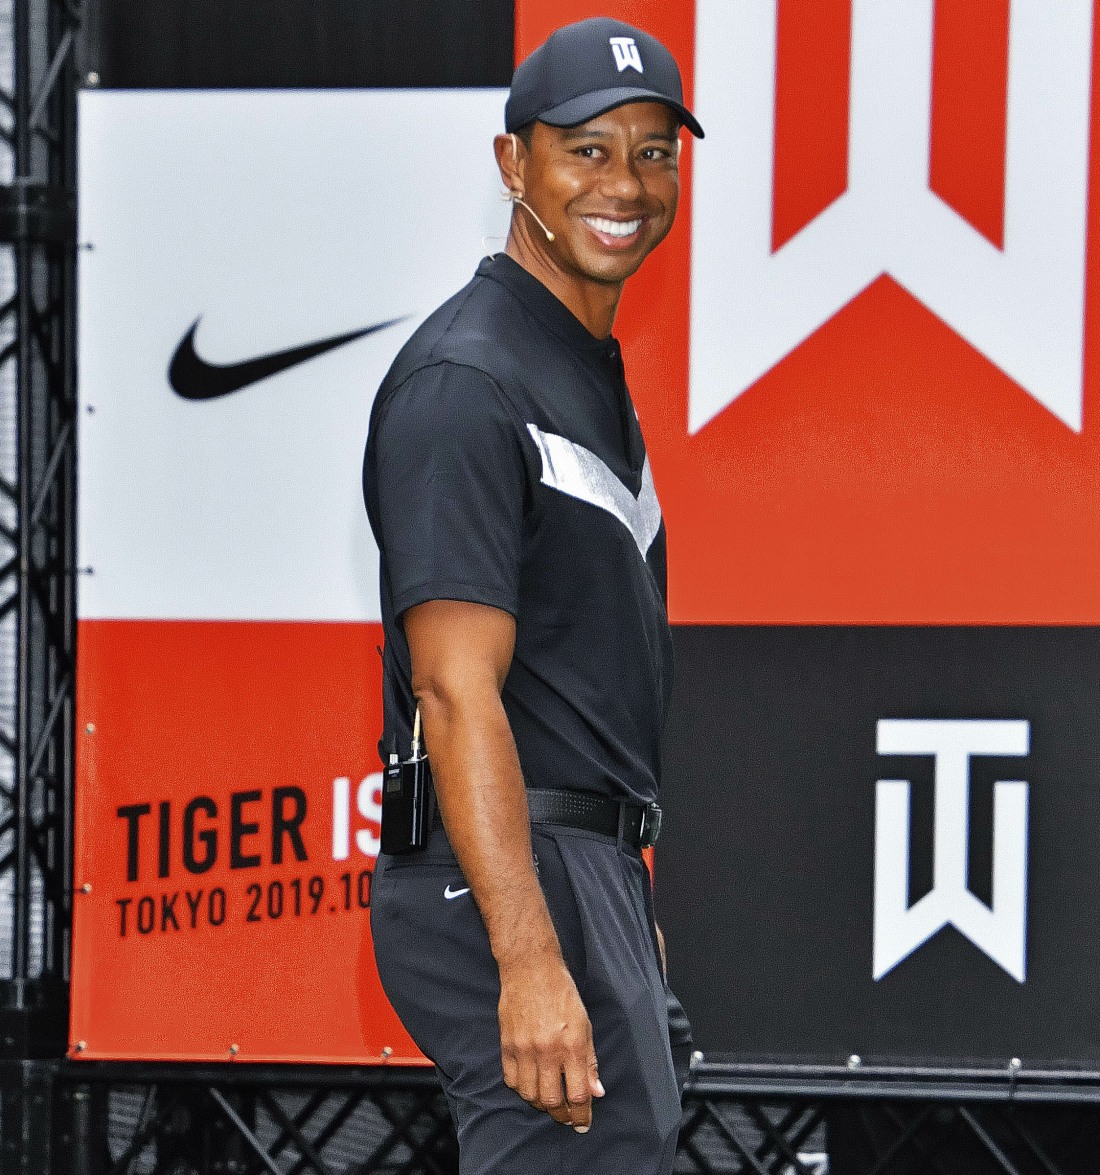 Tiger Woods in Tokyo